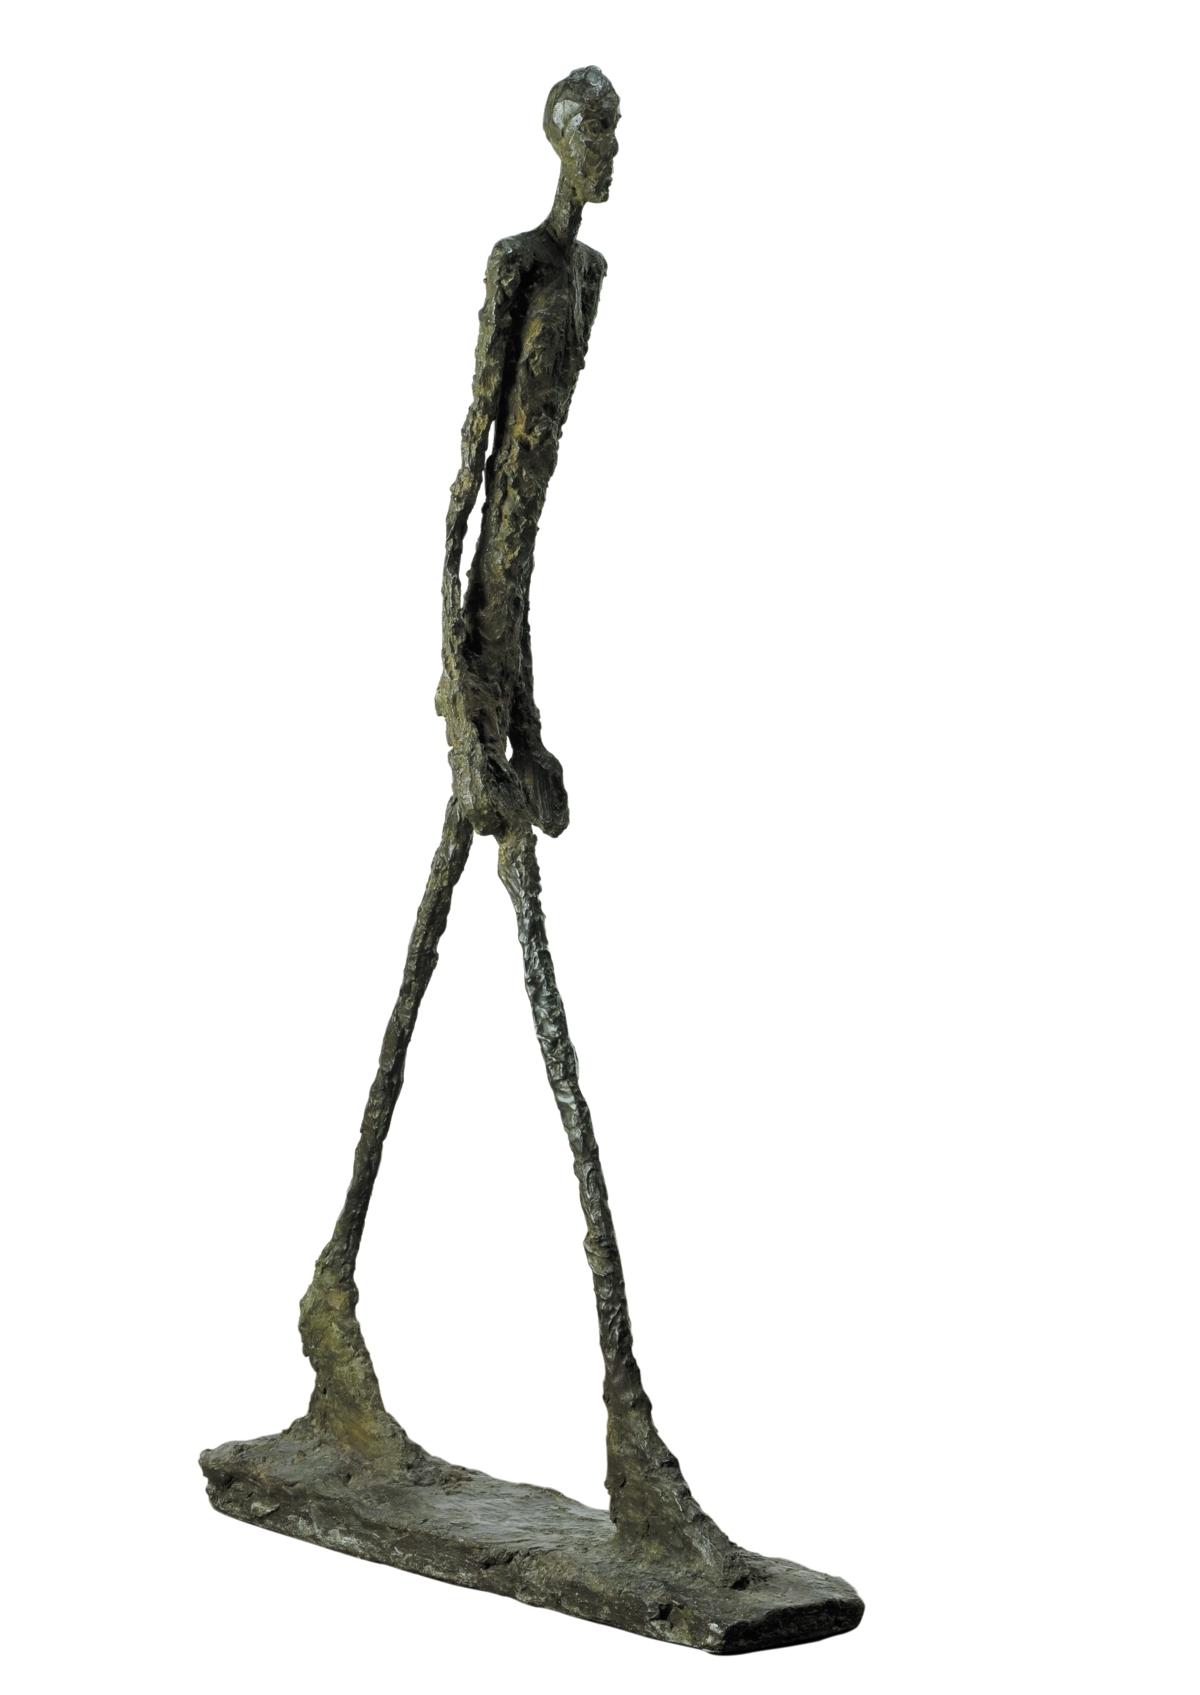 Alberto Giacometti: ”Gående man”, 1960. Skulptur i brons, Louisiana, Humlebæk.